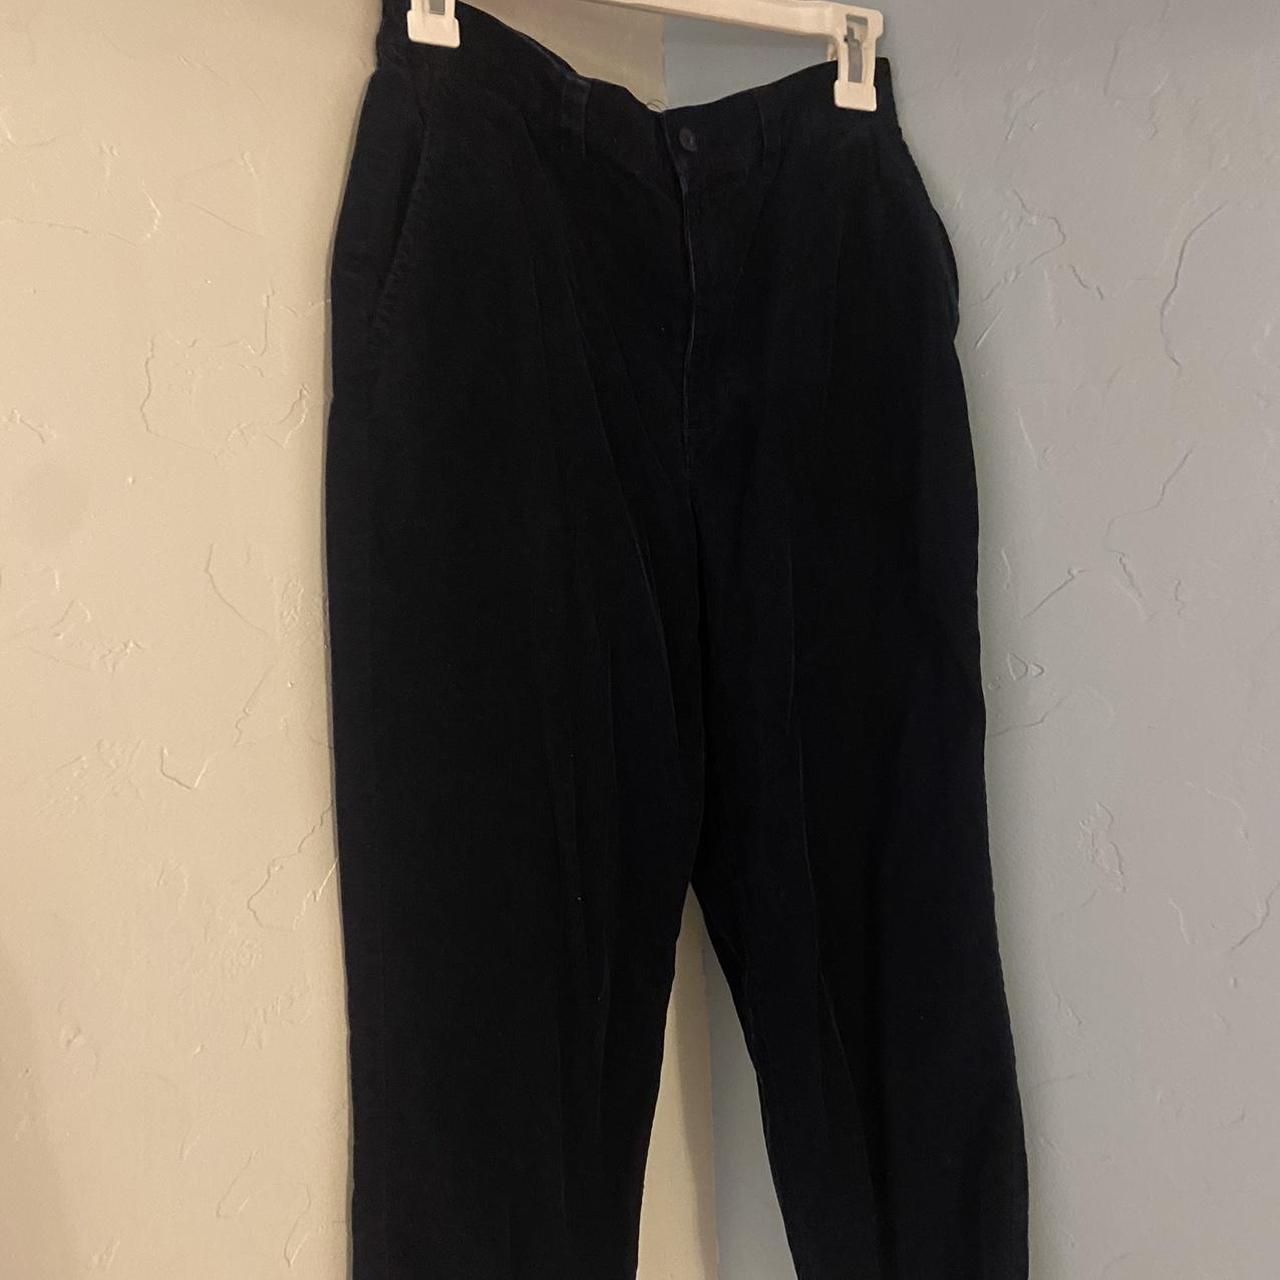 Vintage corduroy navy blue capri pants bought from a... - Depop